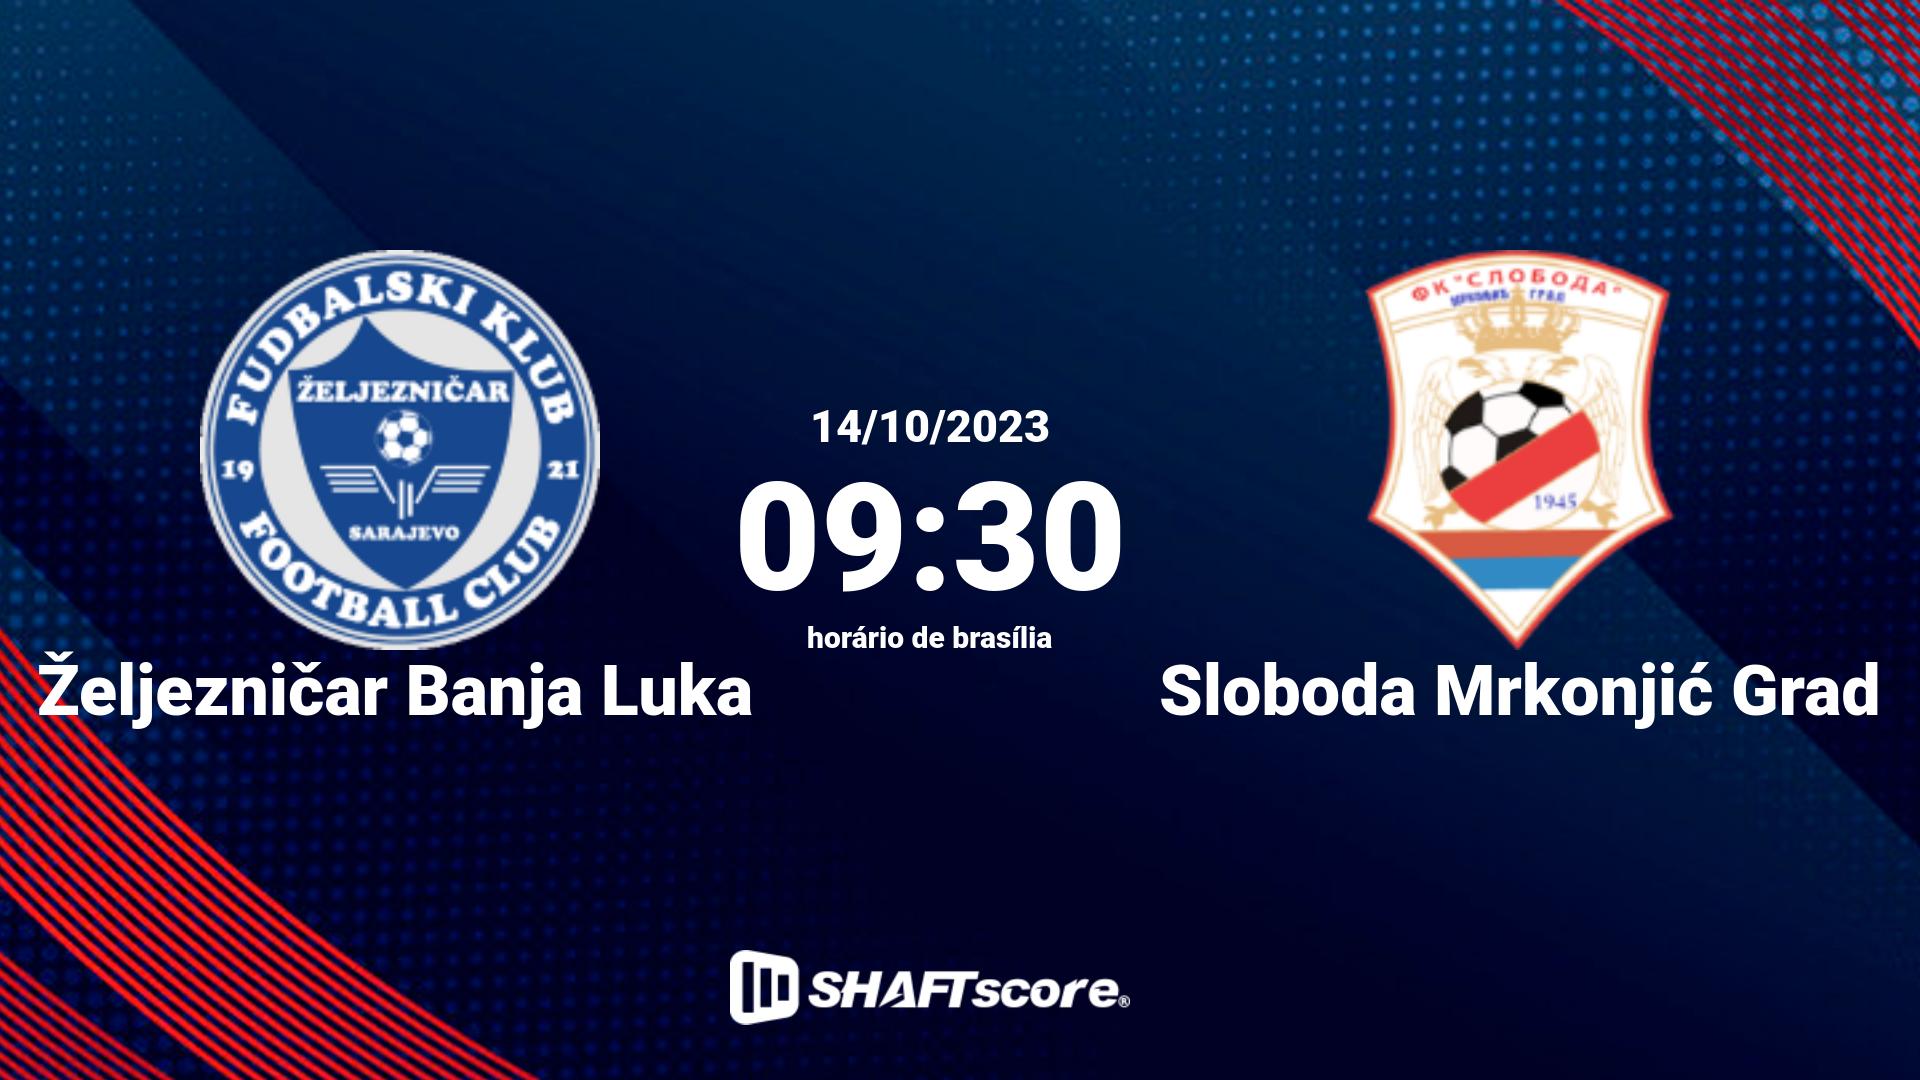 Estatísticas do jogo Željezničar Banja Luka vs Sloboda Mrkonjić Grad 14.10 09:30